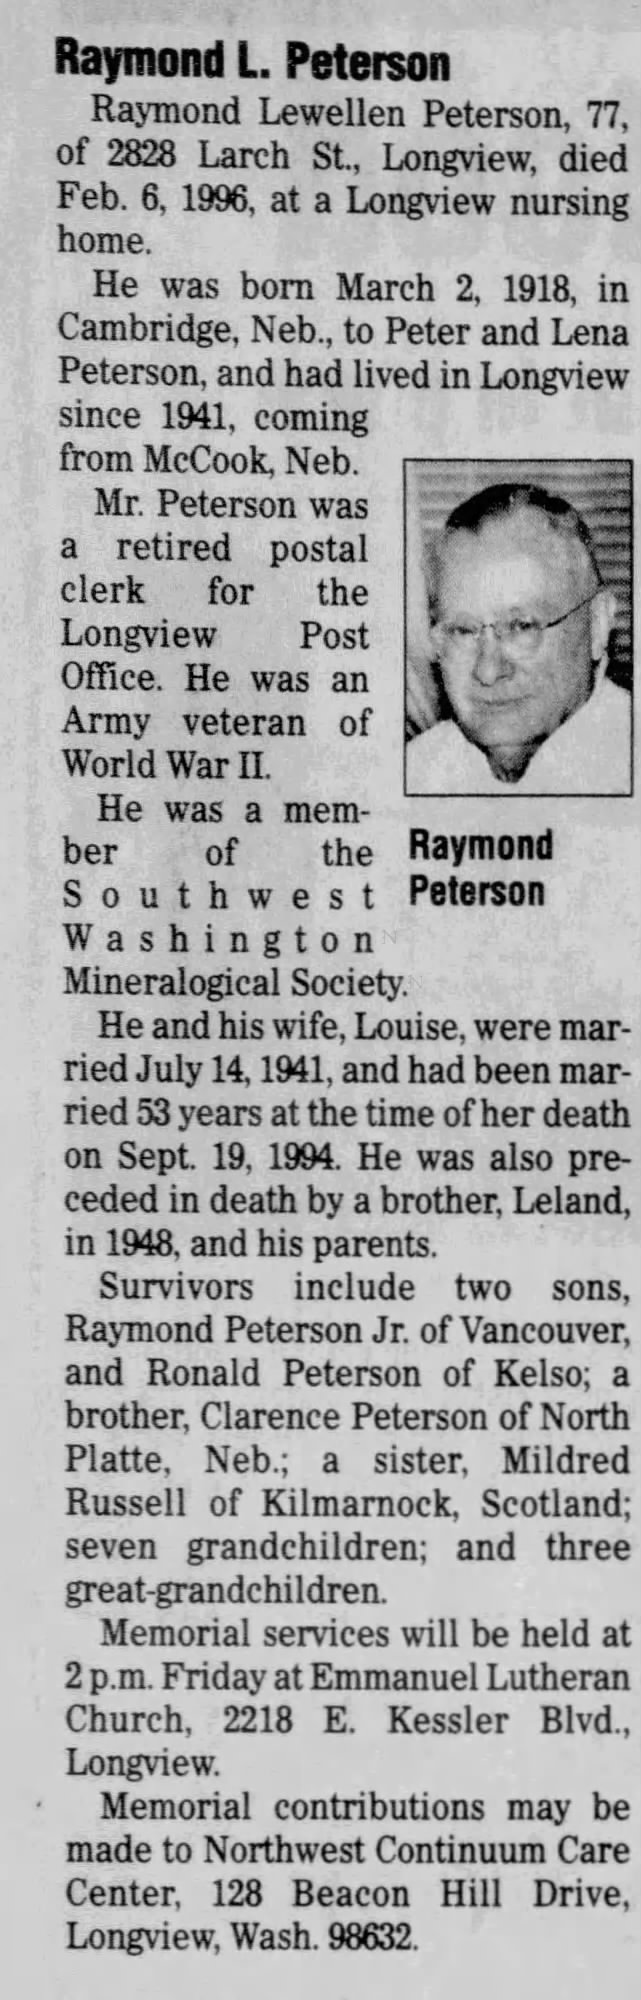 Obituary for Raymond Lewellen Peterson